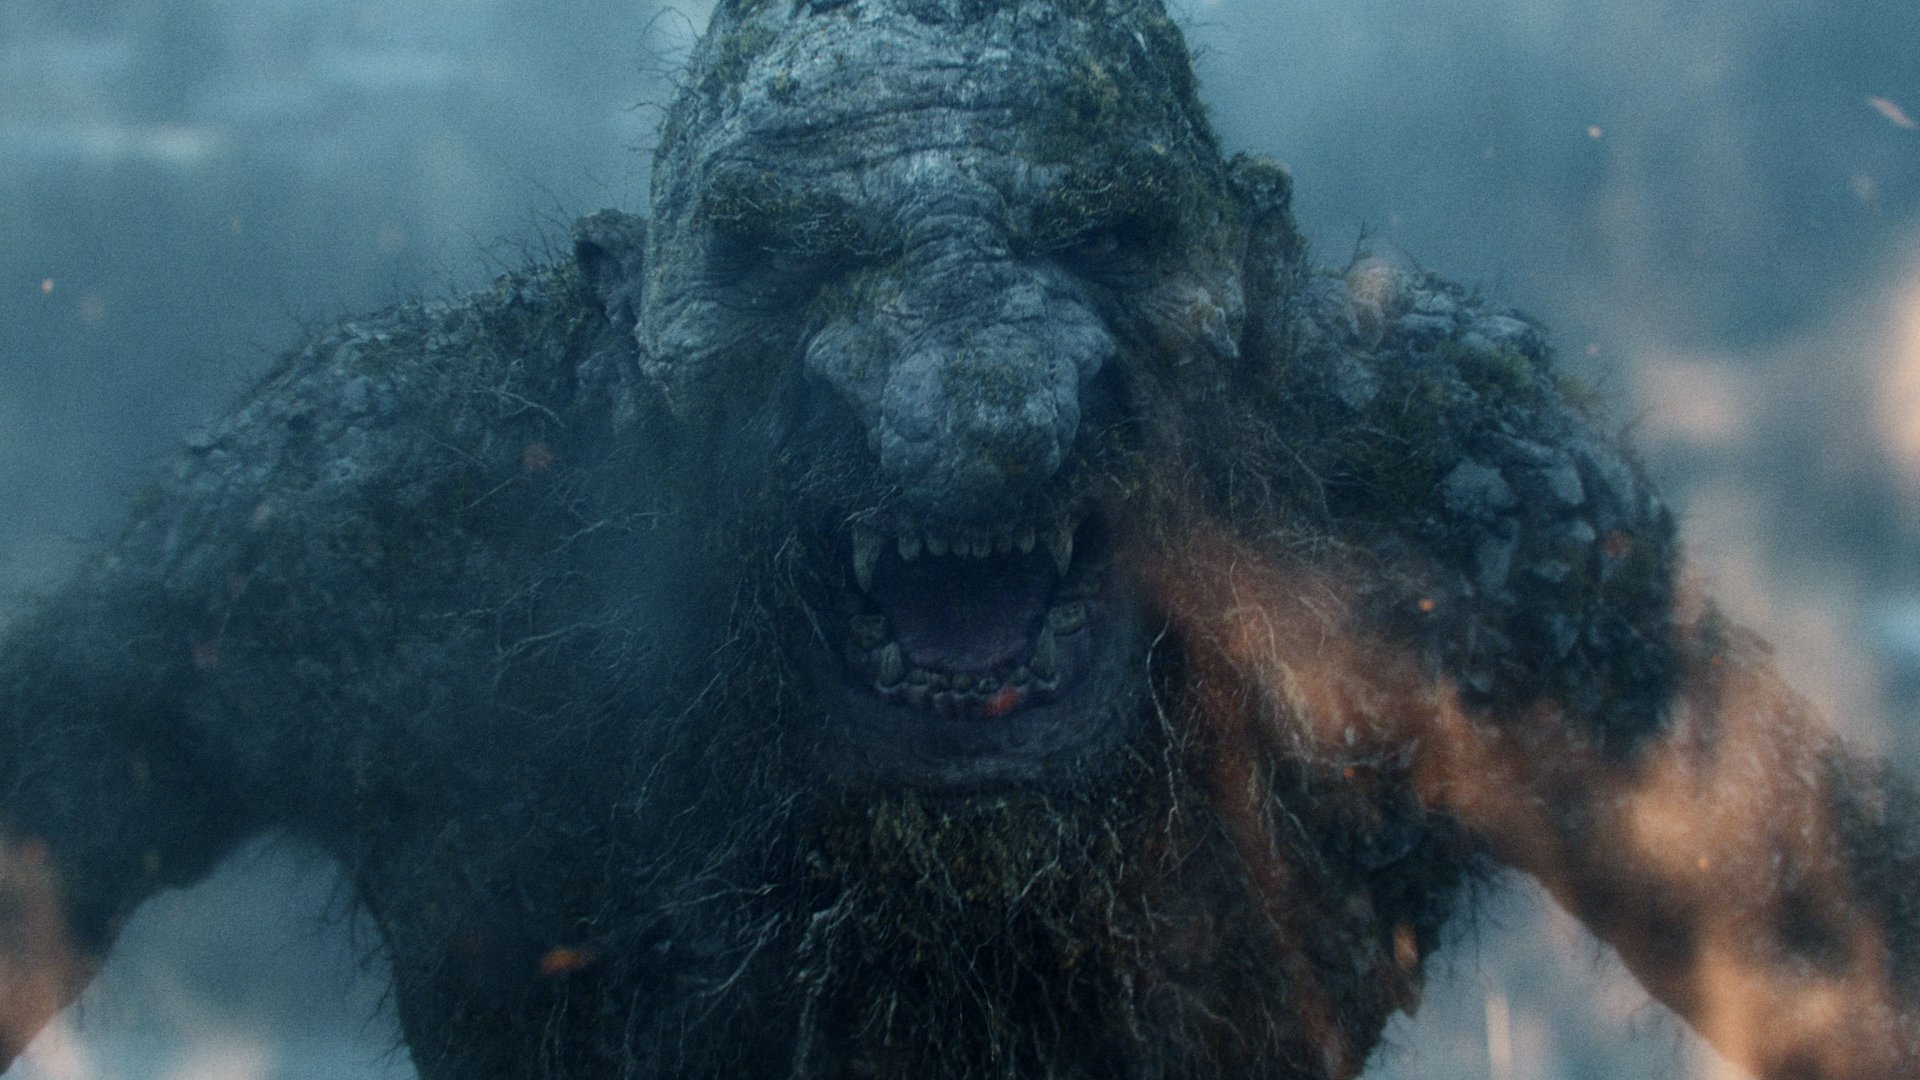 #Netflix-Konkurrenz für Godzilla: Riesiger Troll macht im fetzigen Trailer ganz Norwegen platt